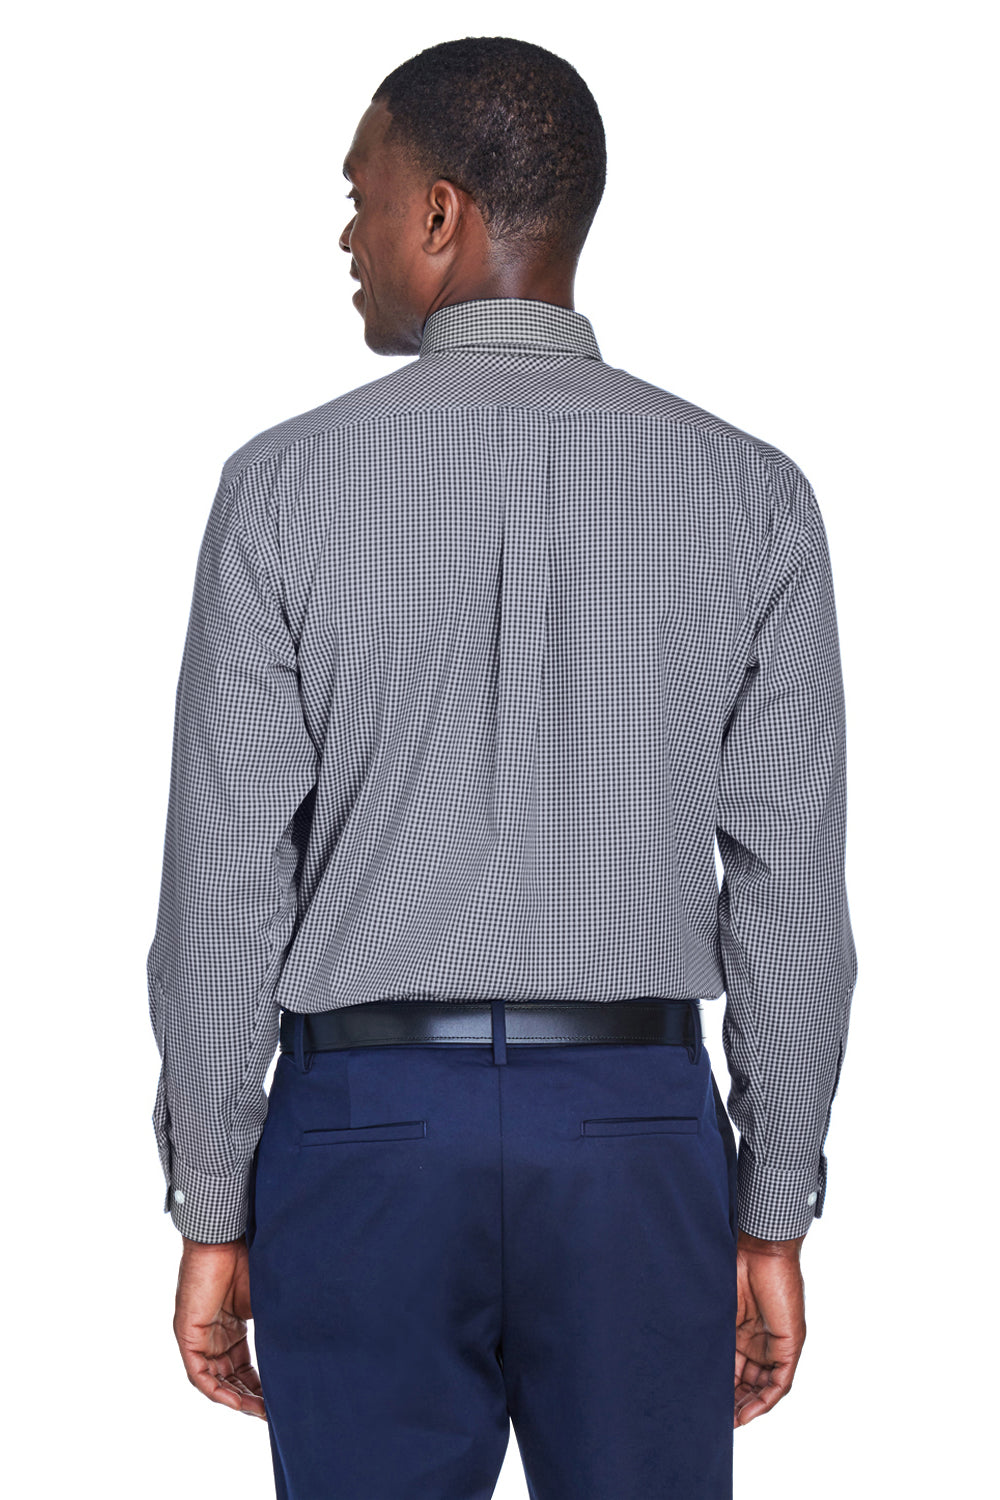 Devon & Jones D640 Mens Crown Woven Collection Wrinkle Resistant Long Sleeve Button Down Shirt w/ Pocket Navy Blue Back